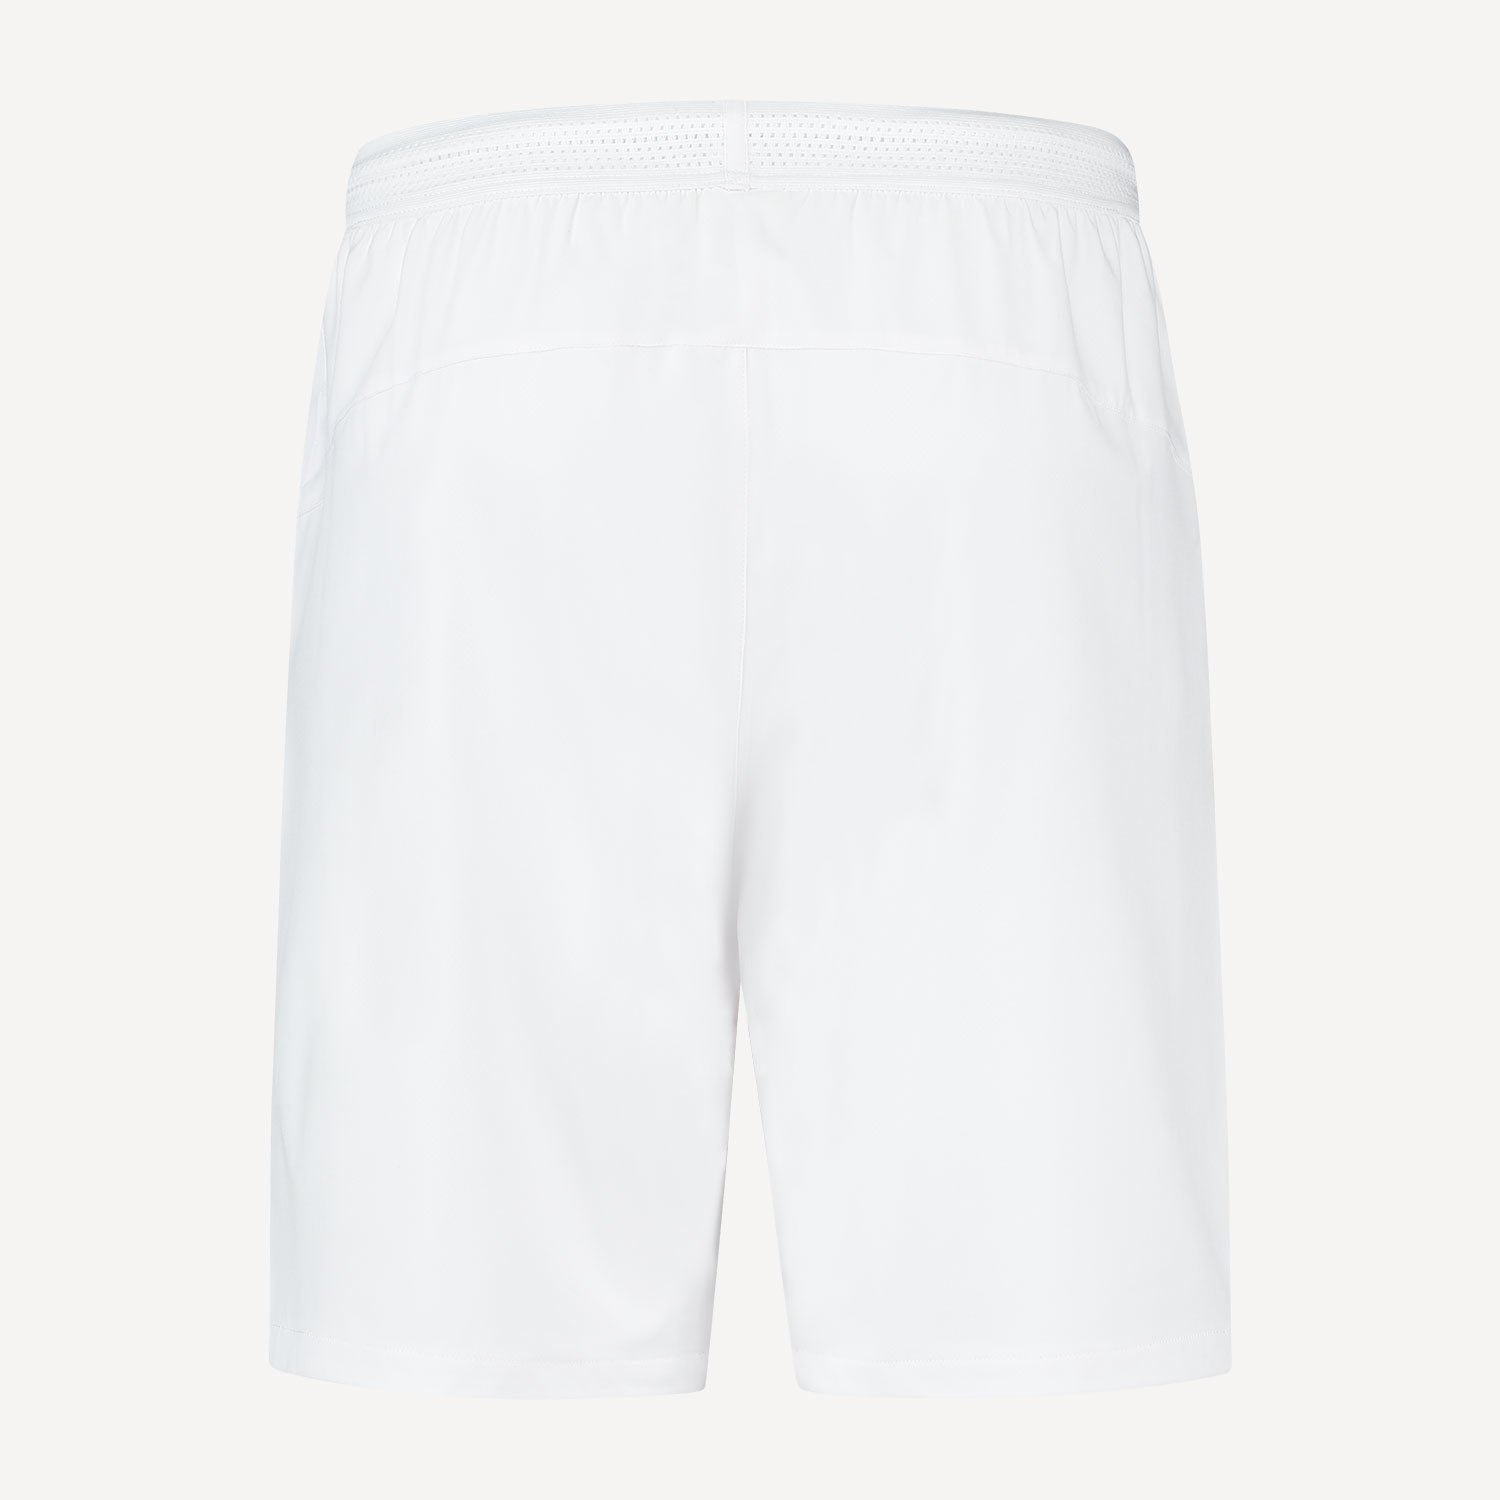 K-Swiss Hypercourt Men's 8-Inch Tennis Shorts White (2)